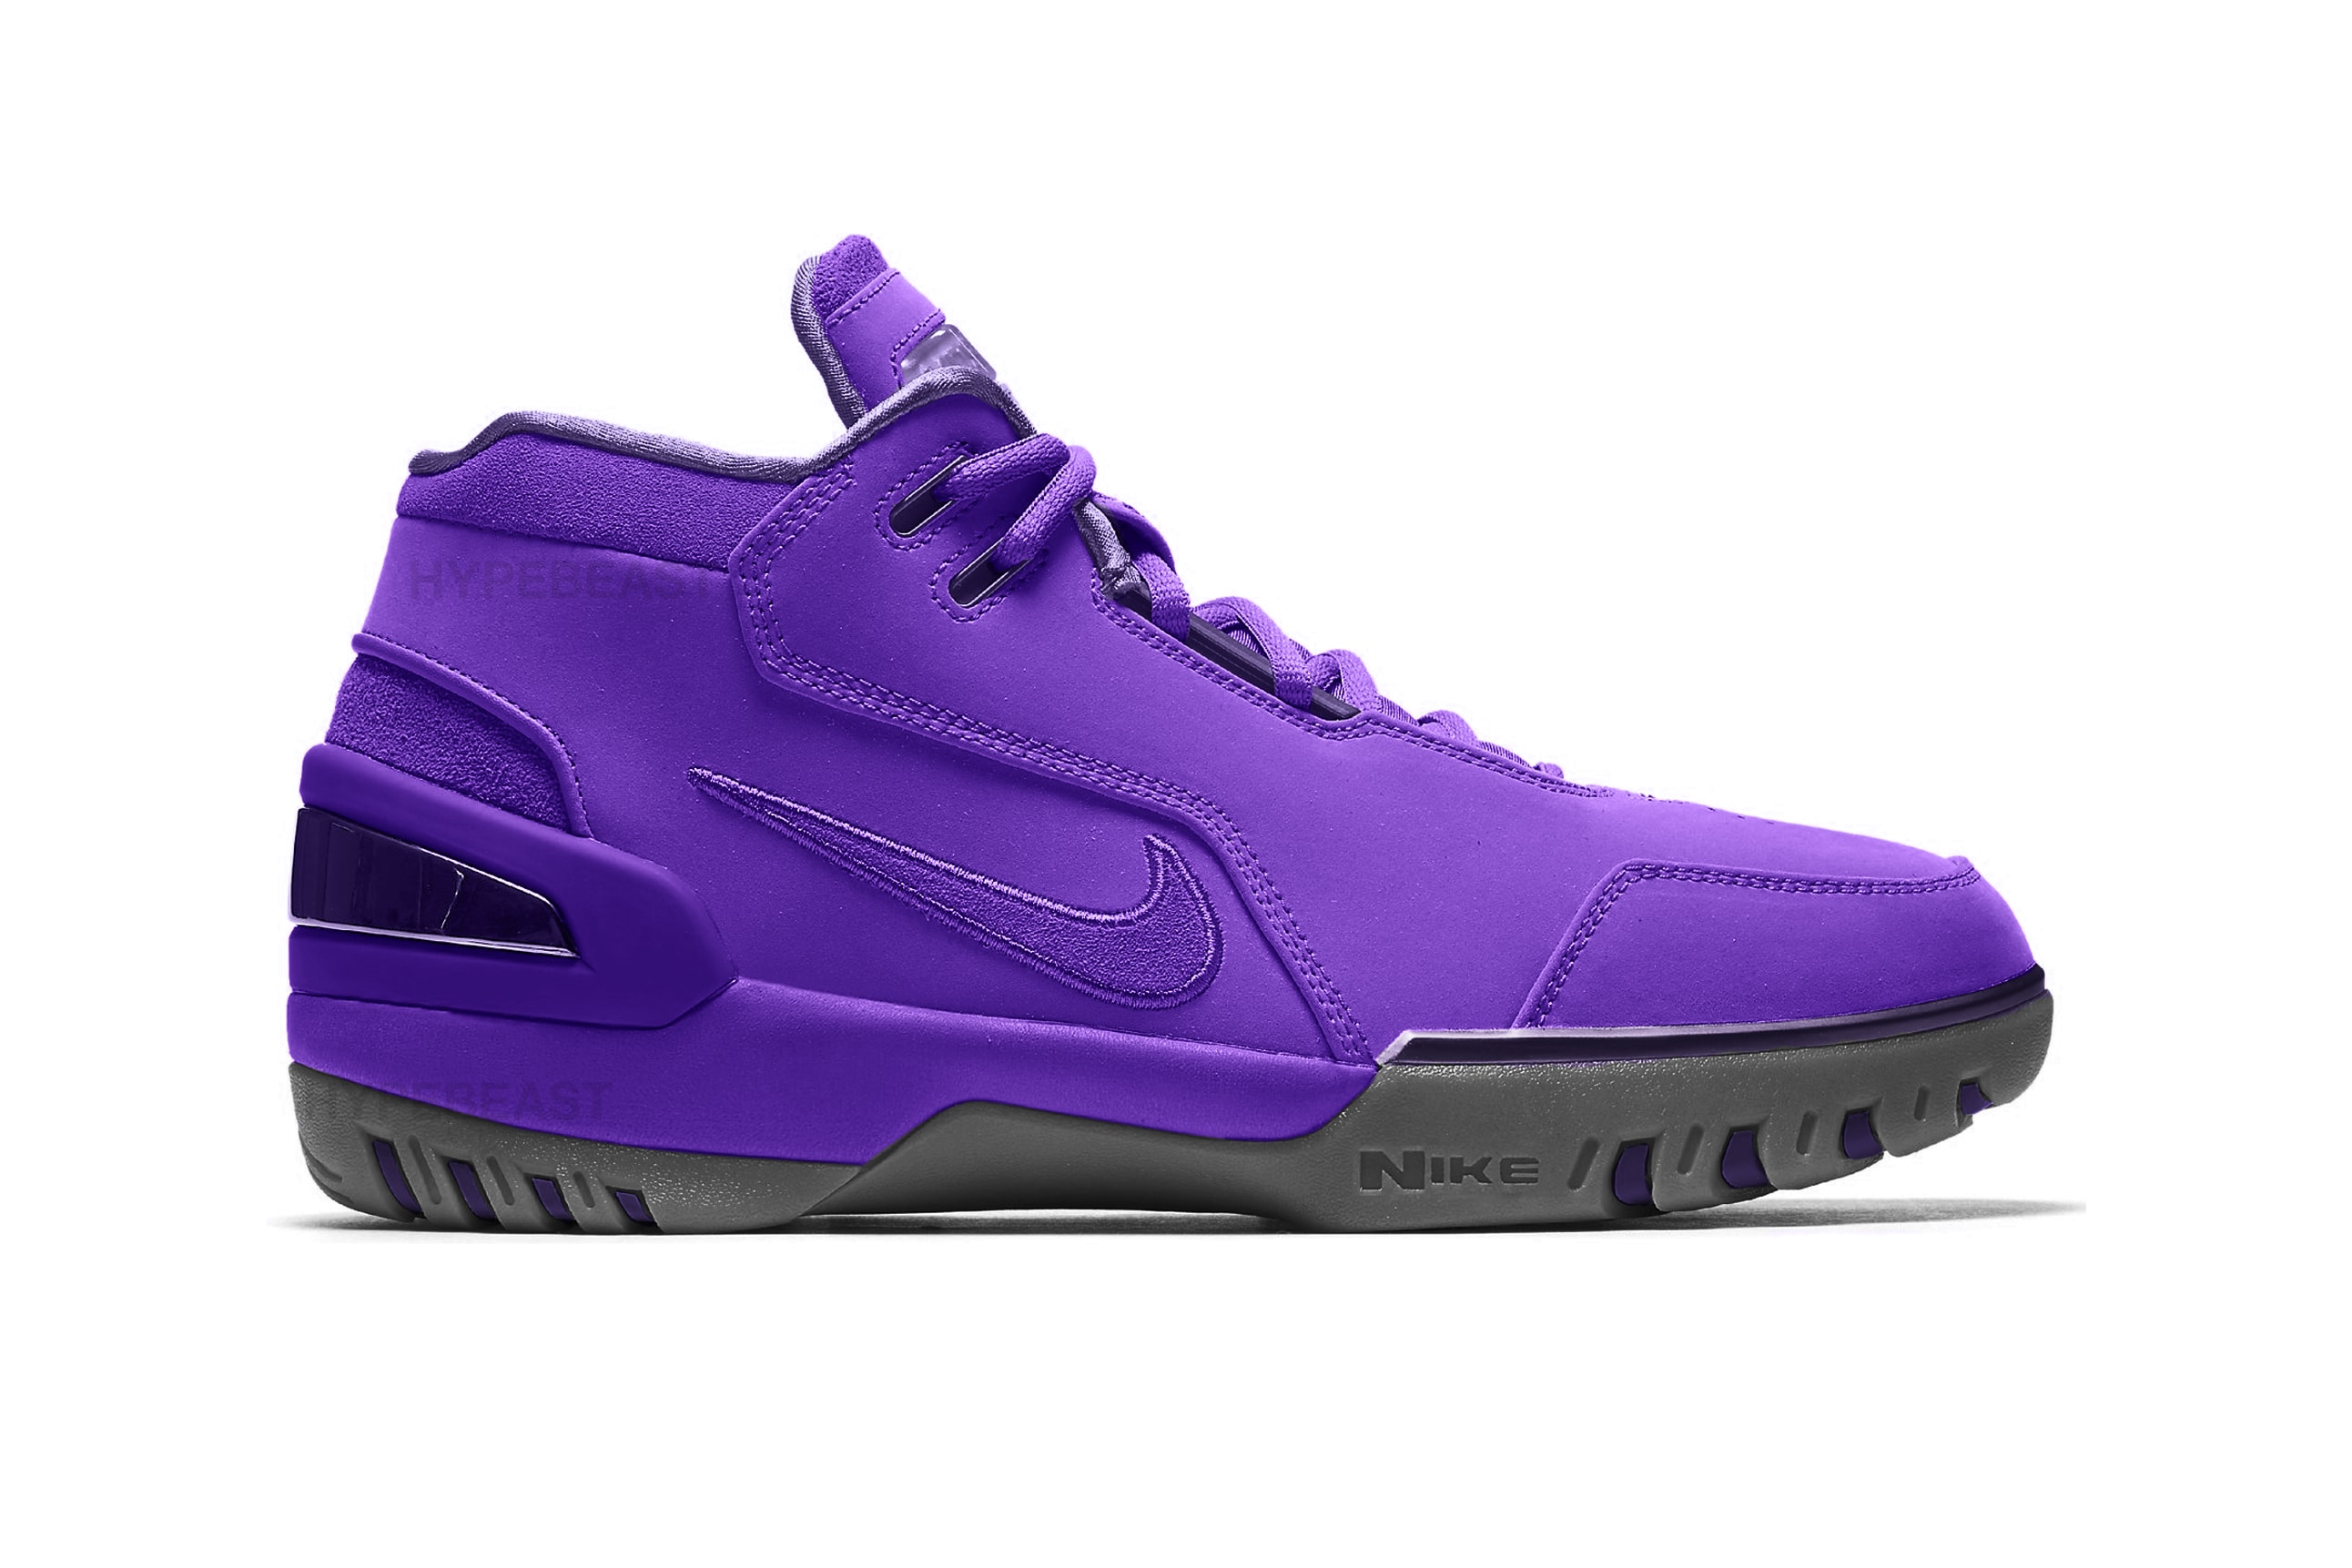 LeBron James Nike Air Zoom Generation PE First Look new purple suede sneakers footwear Quicken Loans Arena basketball